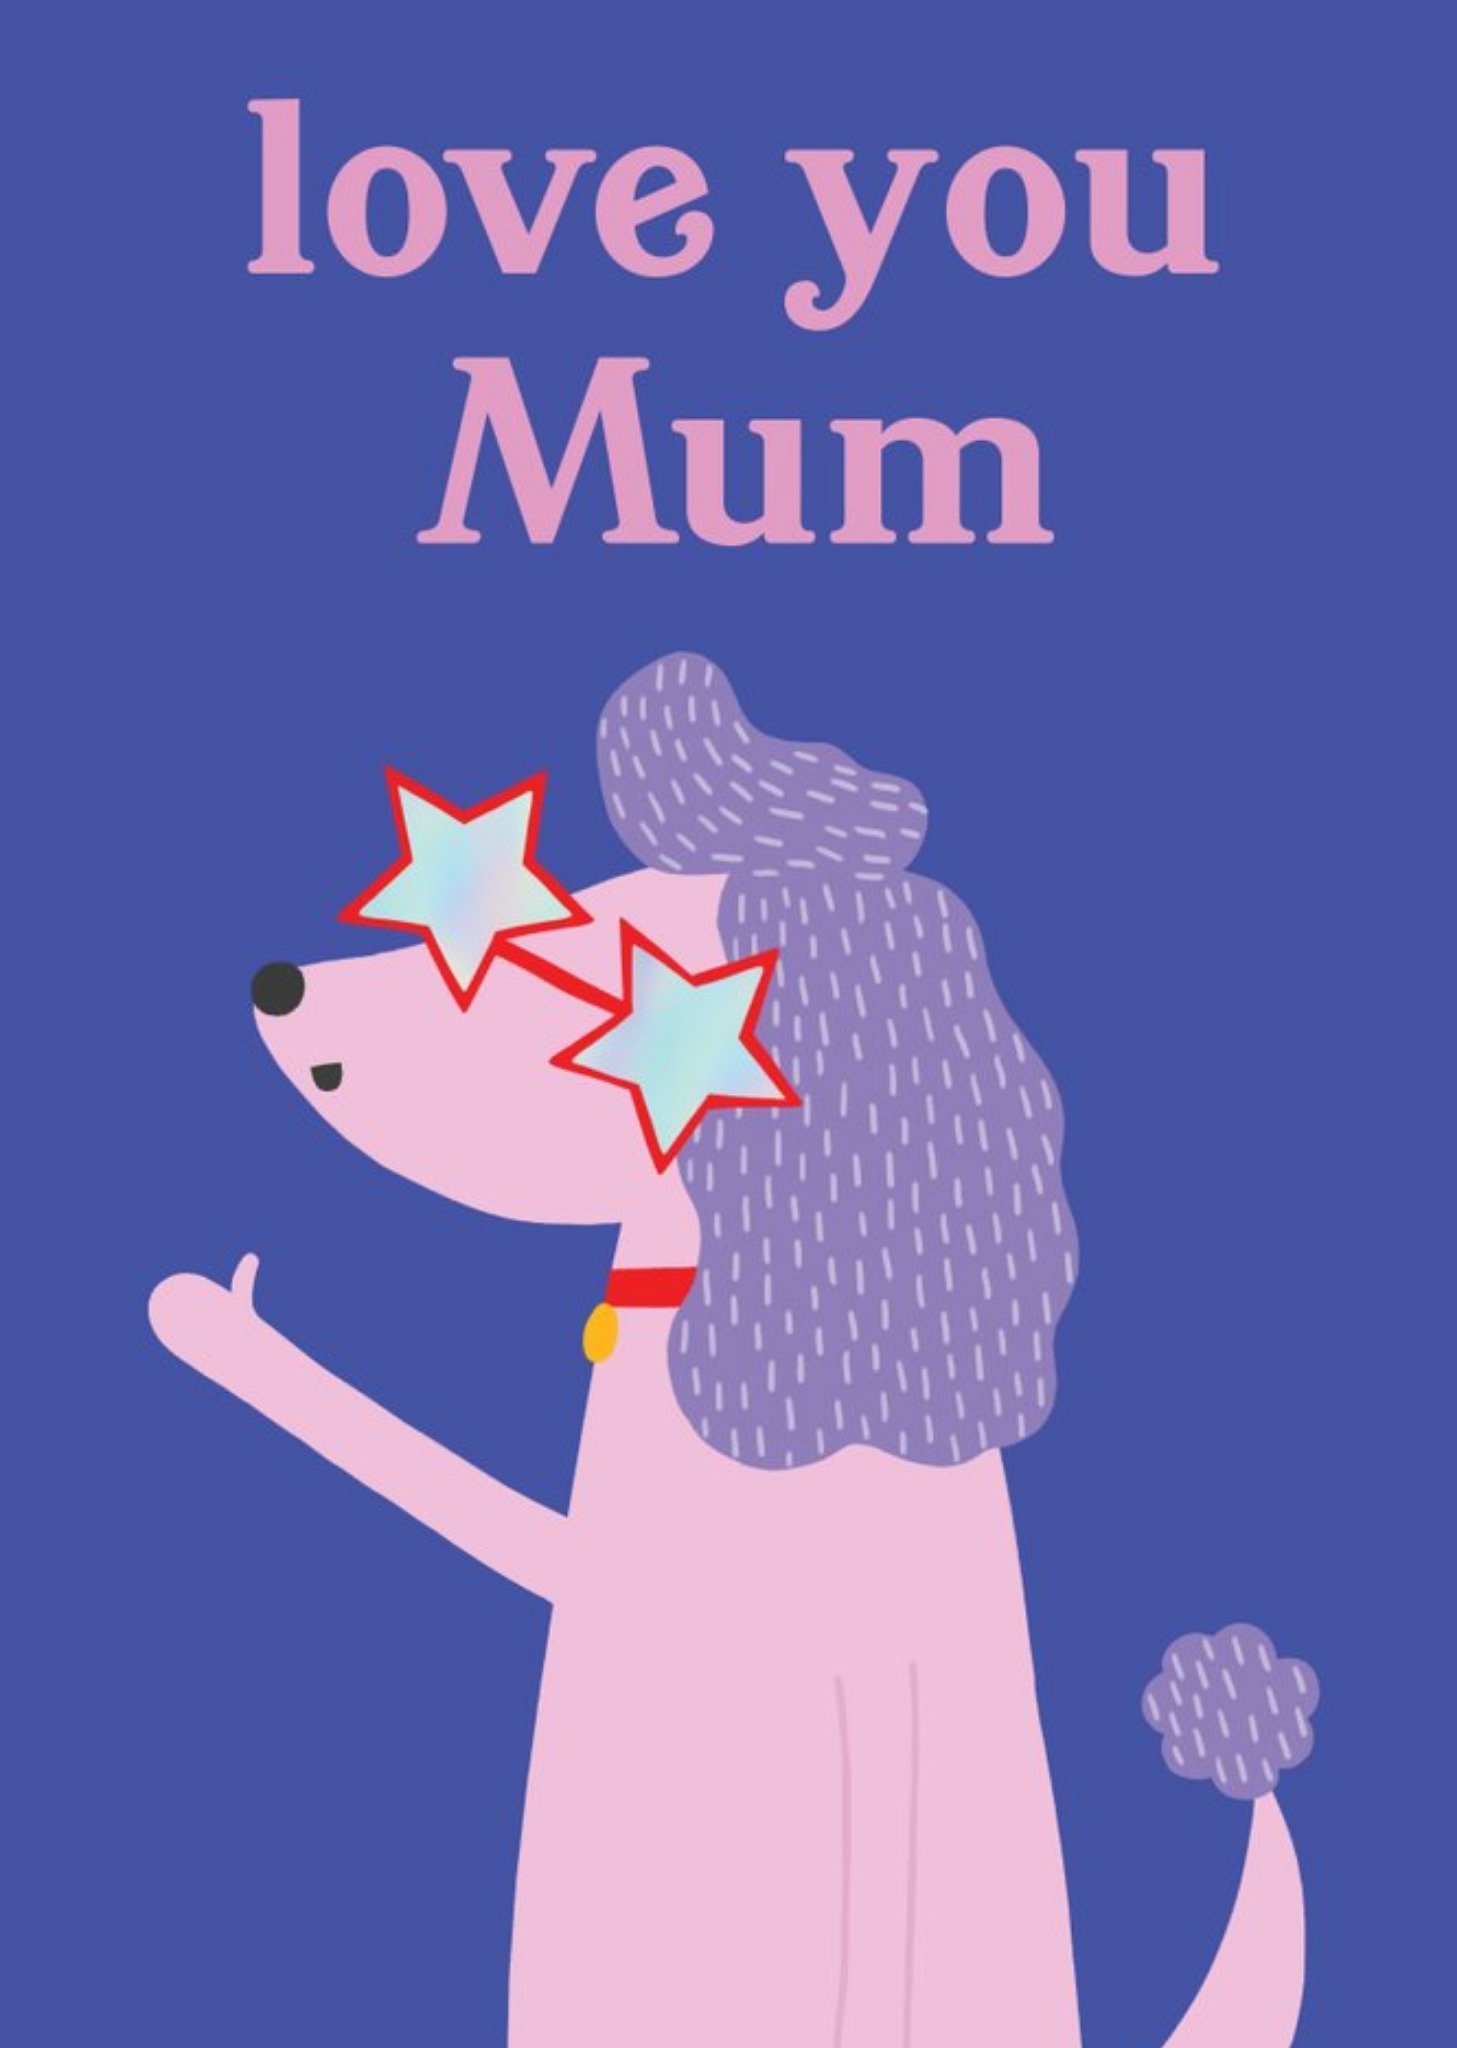 Moonpig Paperlink Choose Joy Love You Mum Mother's Day Card Ecard